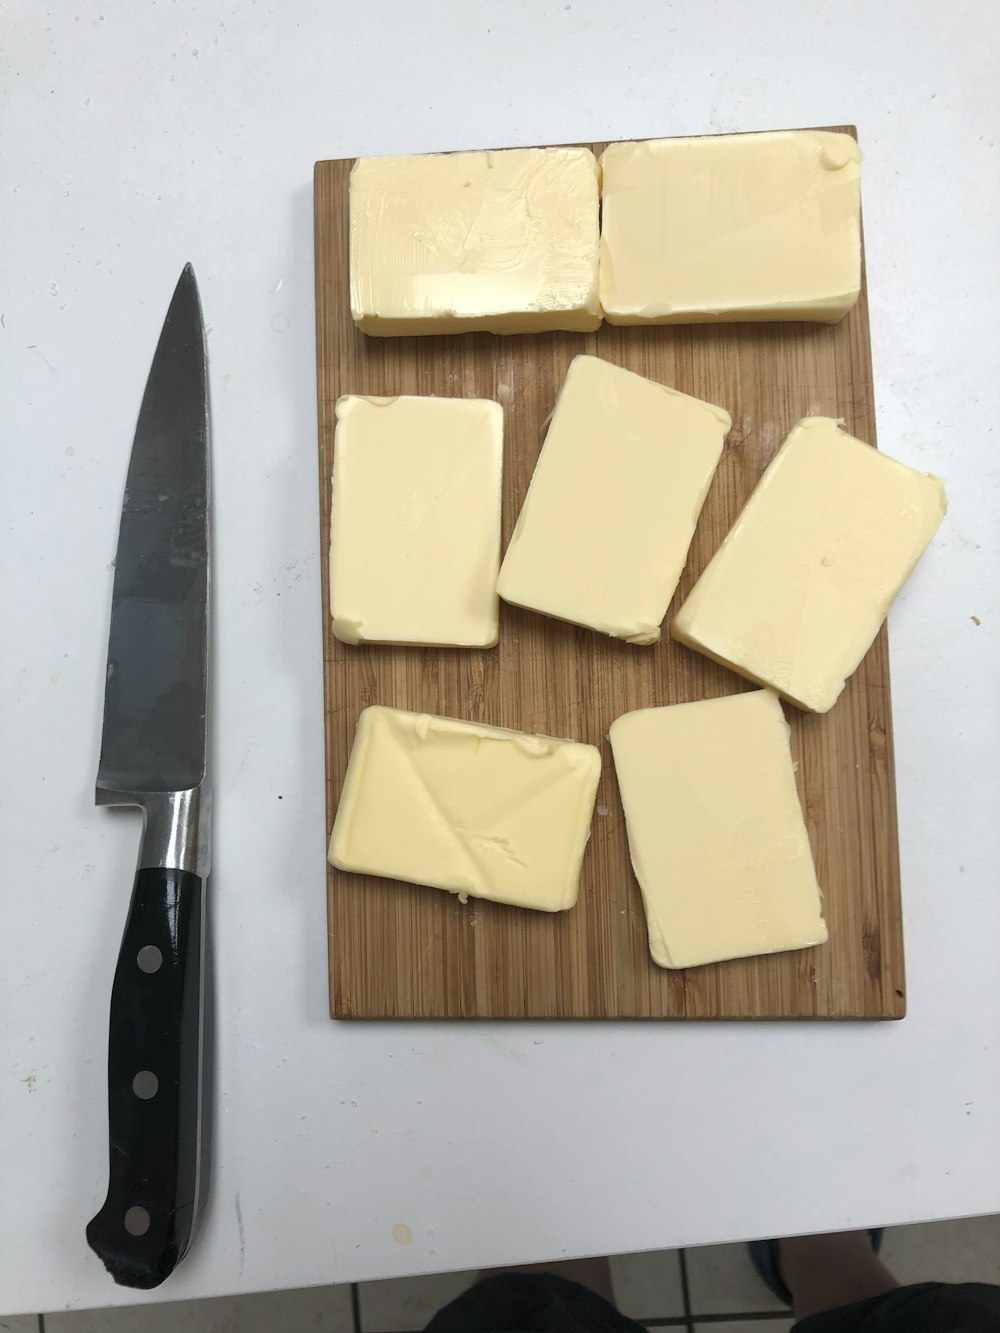 black handled knife beside cheese